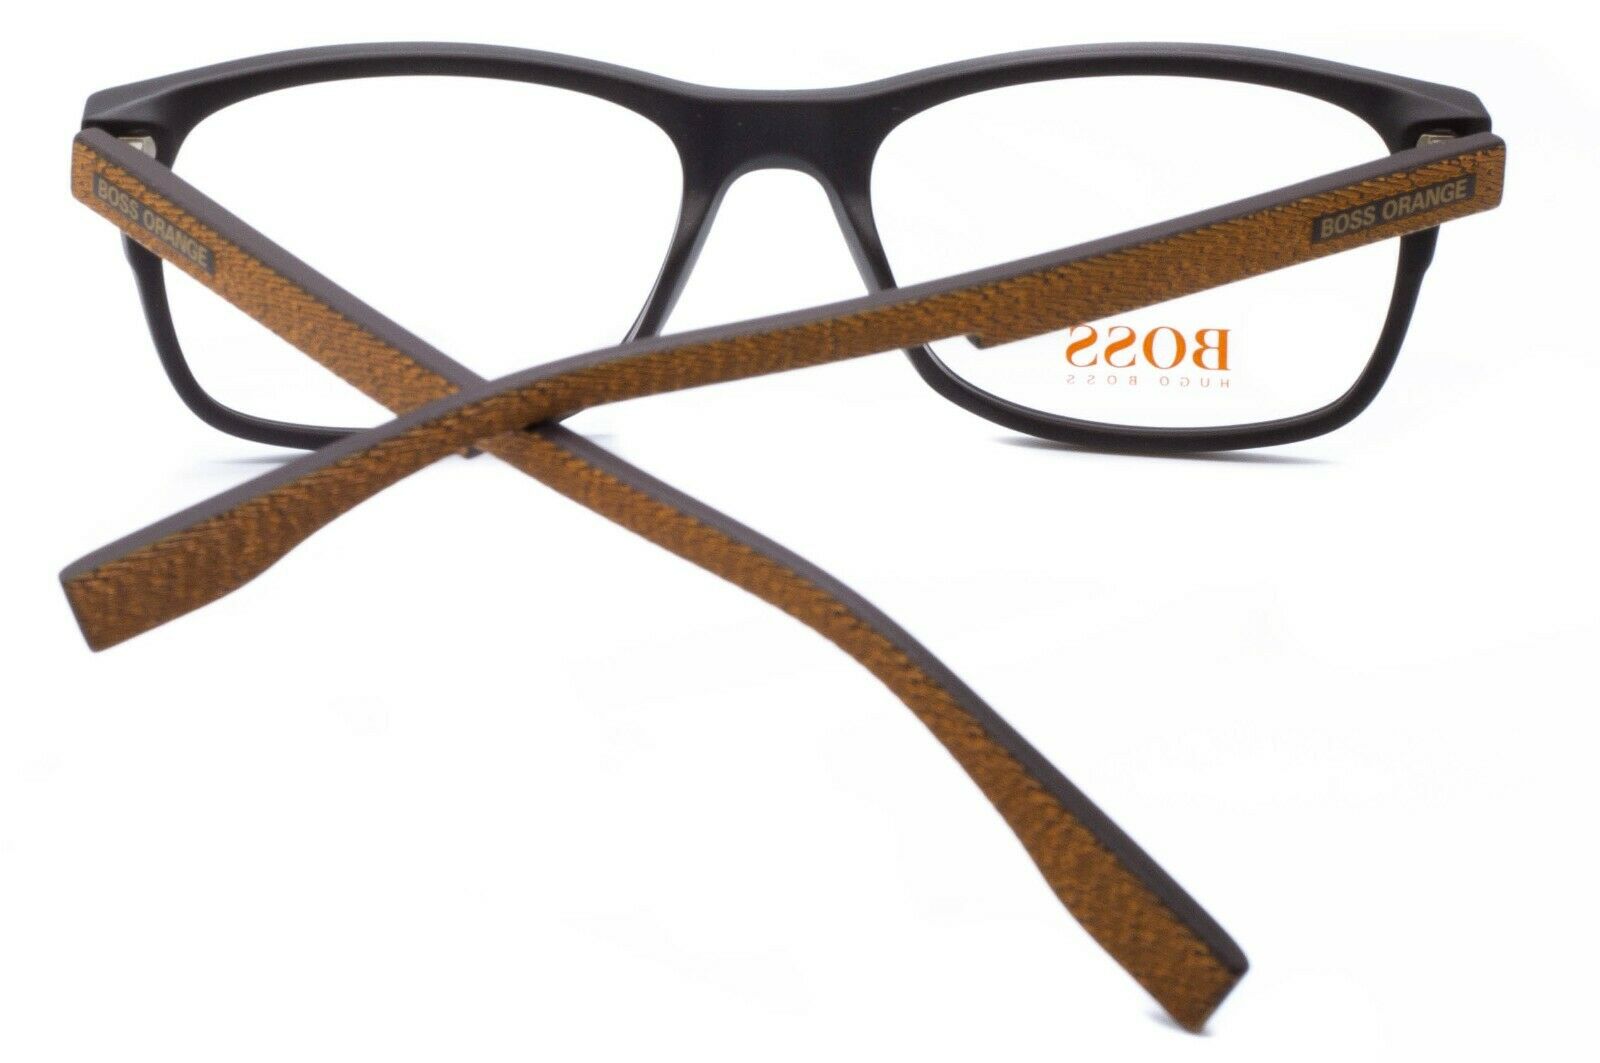 BOSS ORANGE BO 291 09Q 52mm Eyewear FRAMES RX Optical Glasses Eyeglasses - New